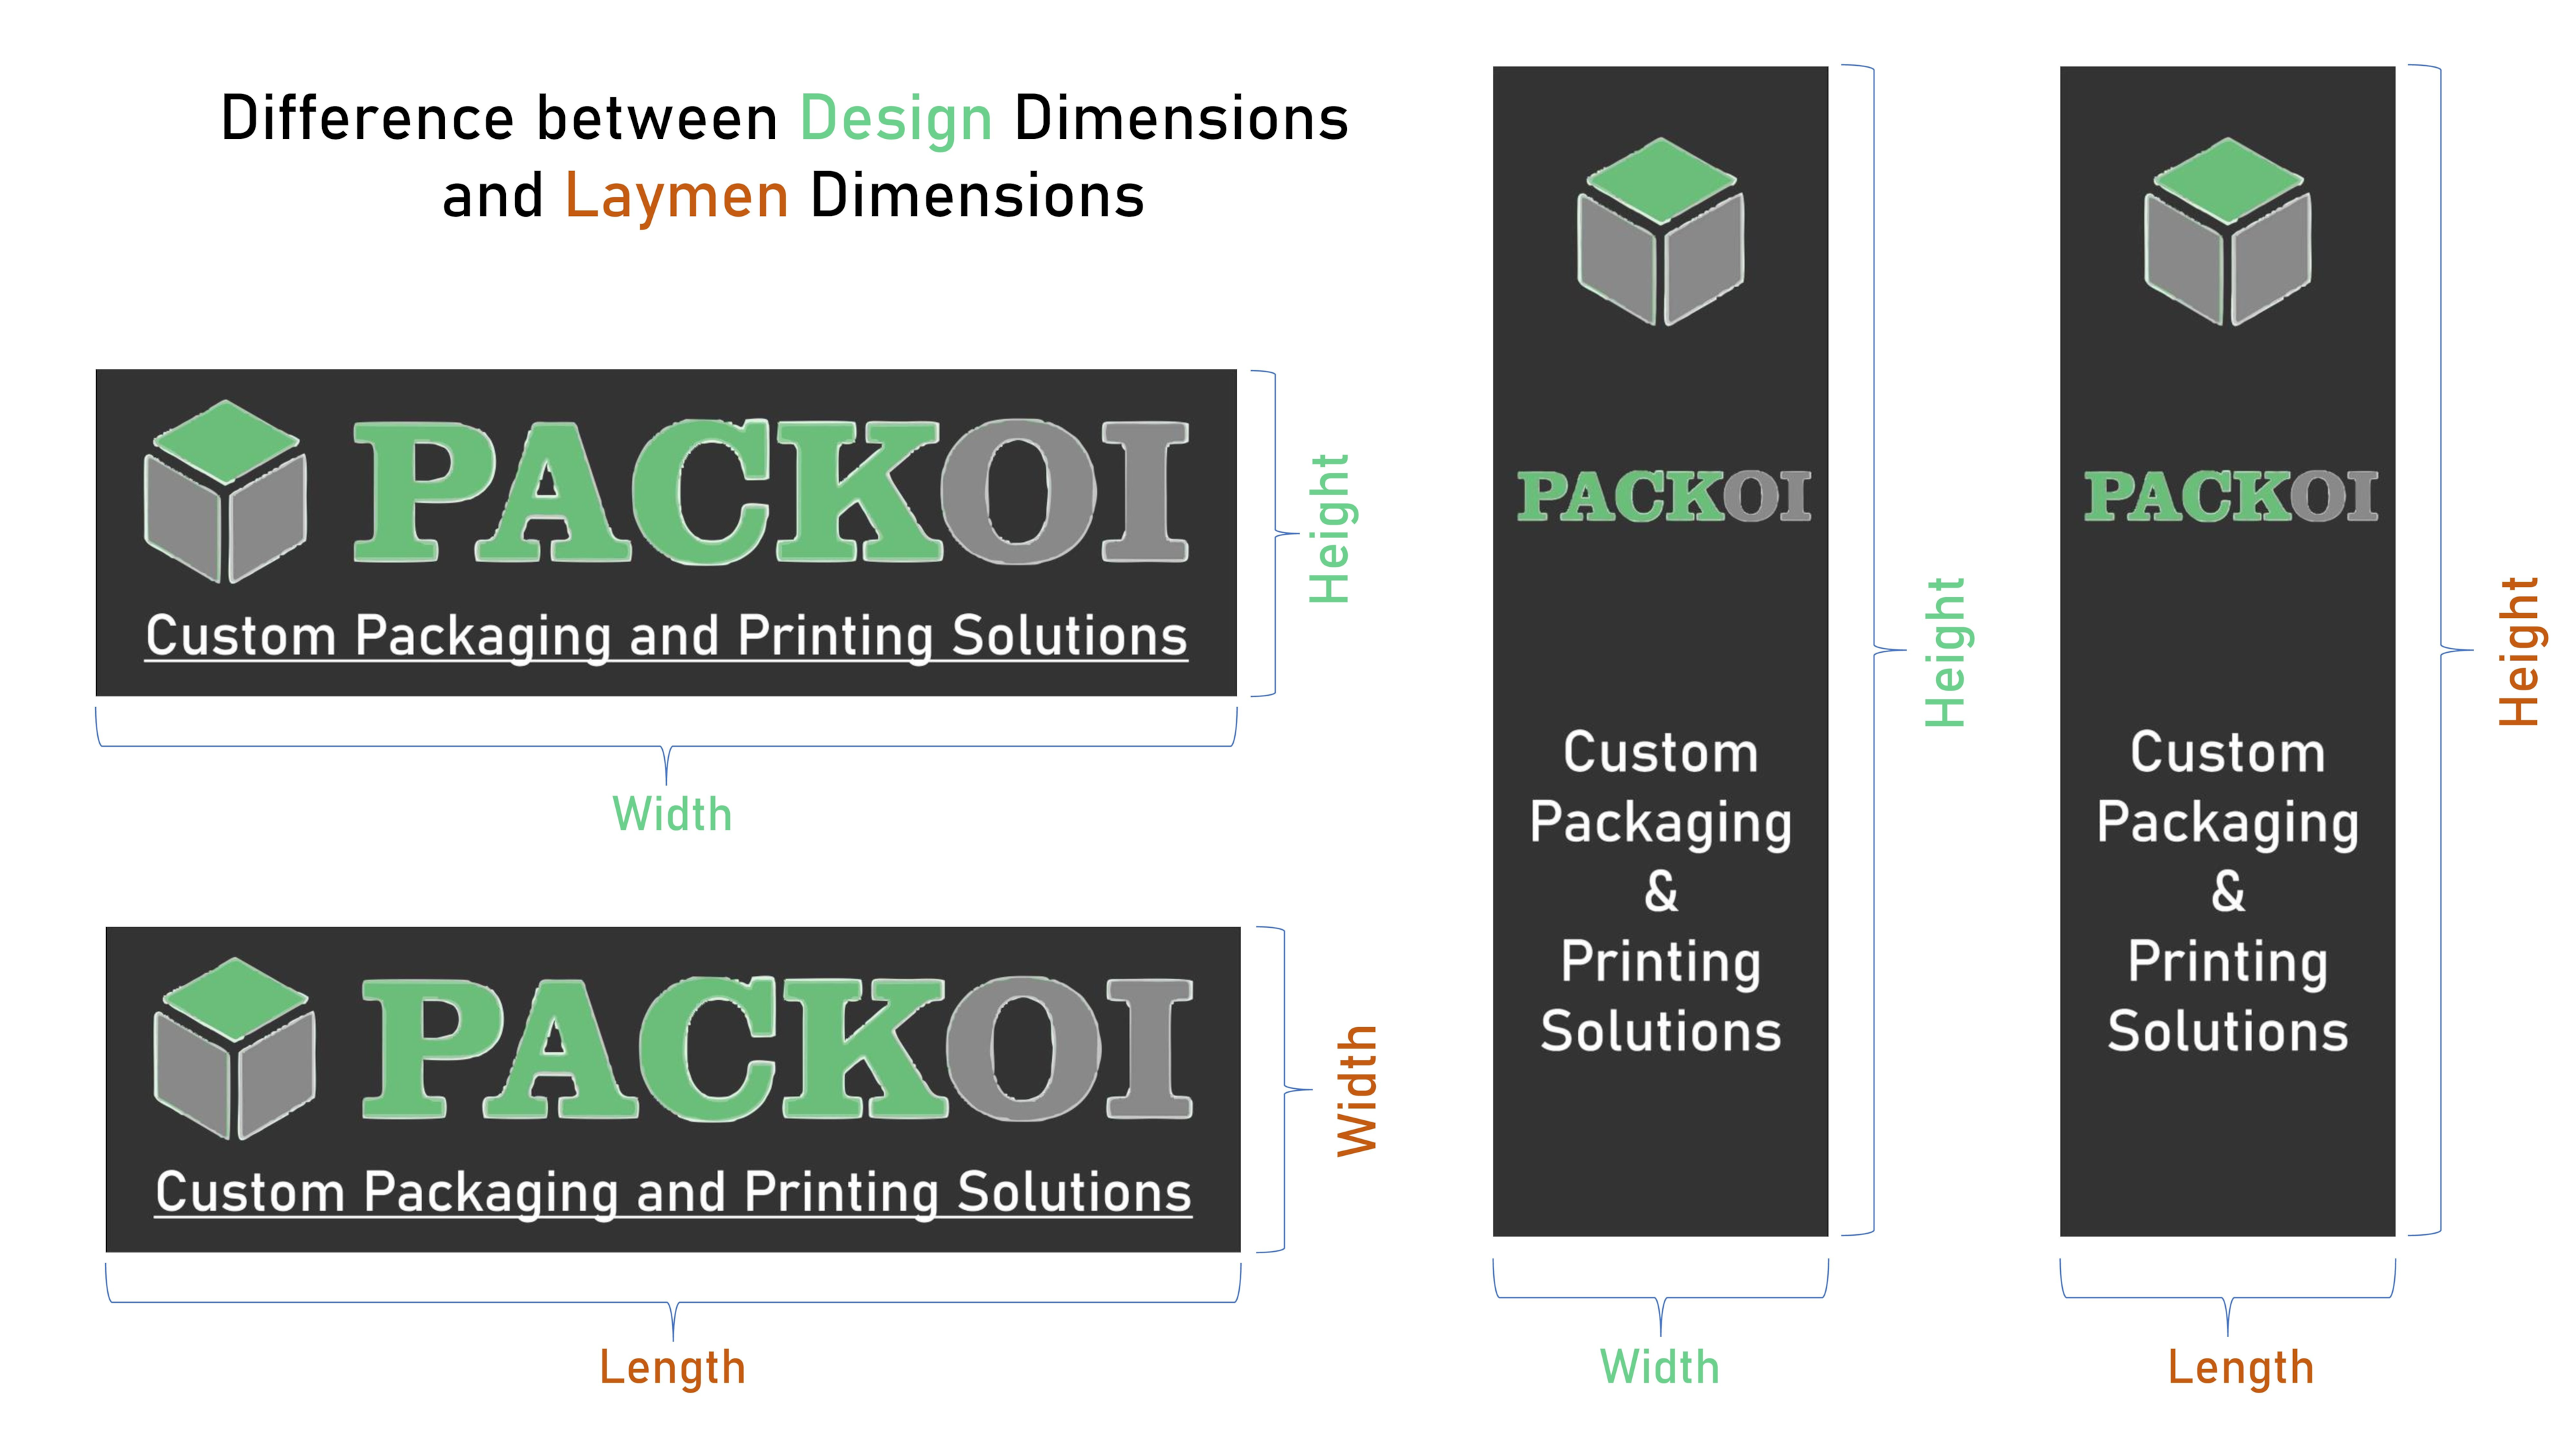 Differnce Between Design & Laymen Dimensions